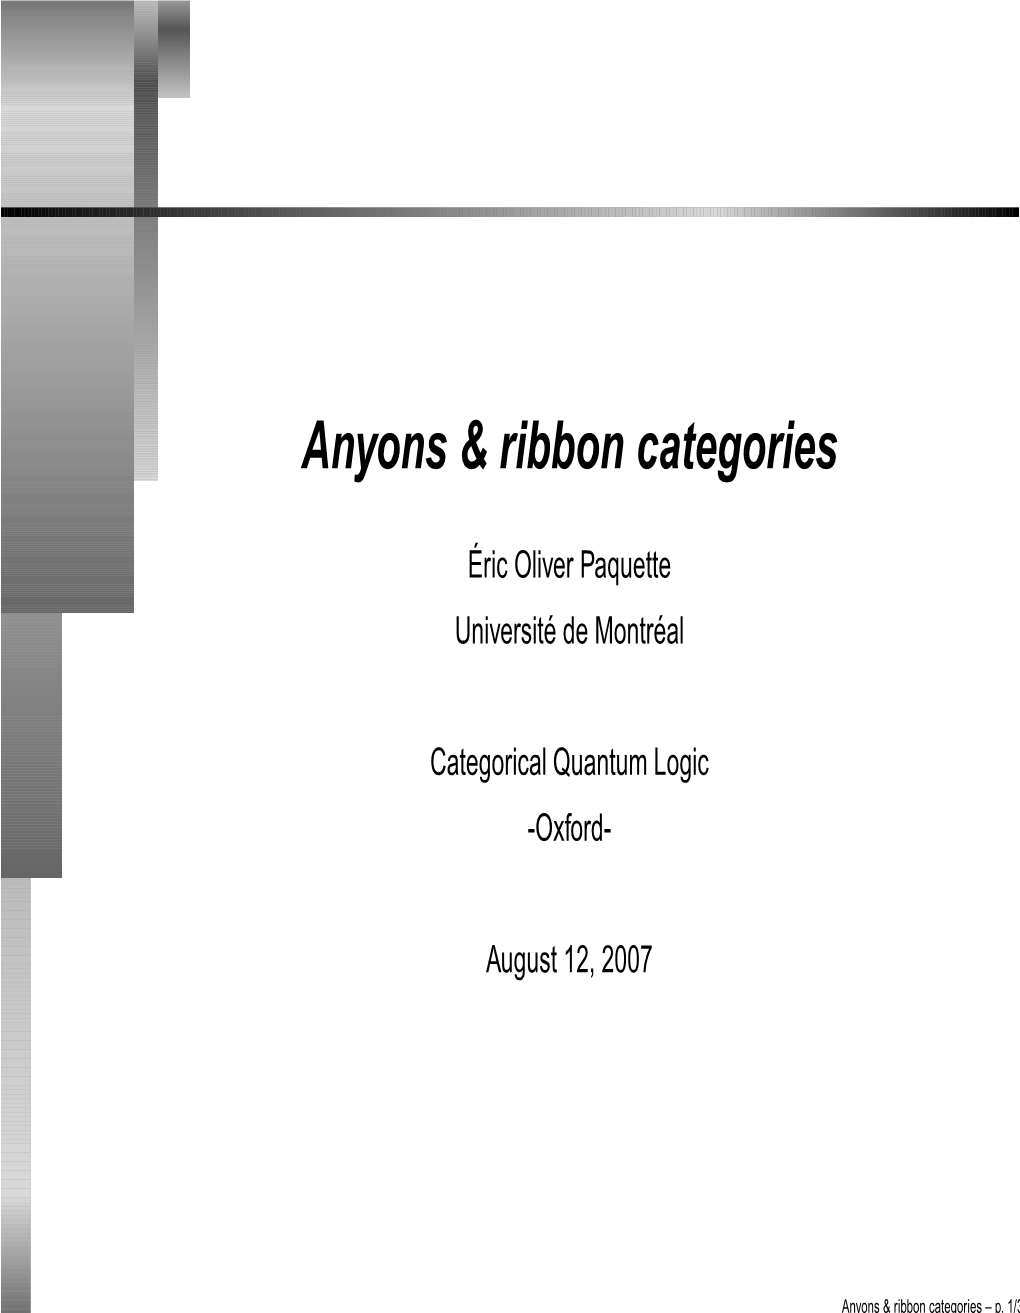 Anyons & Ribbon Categories